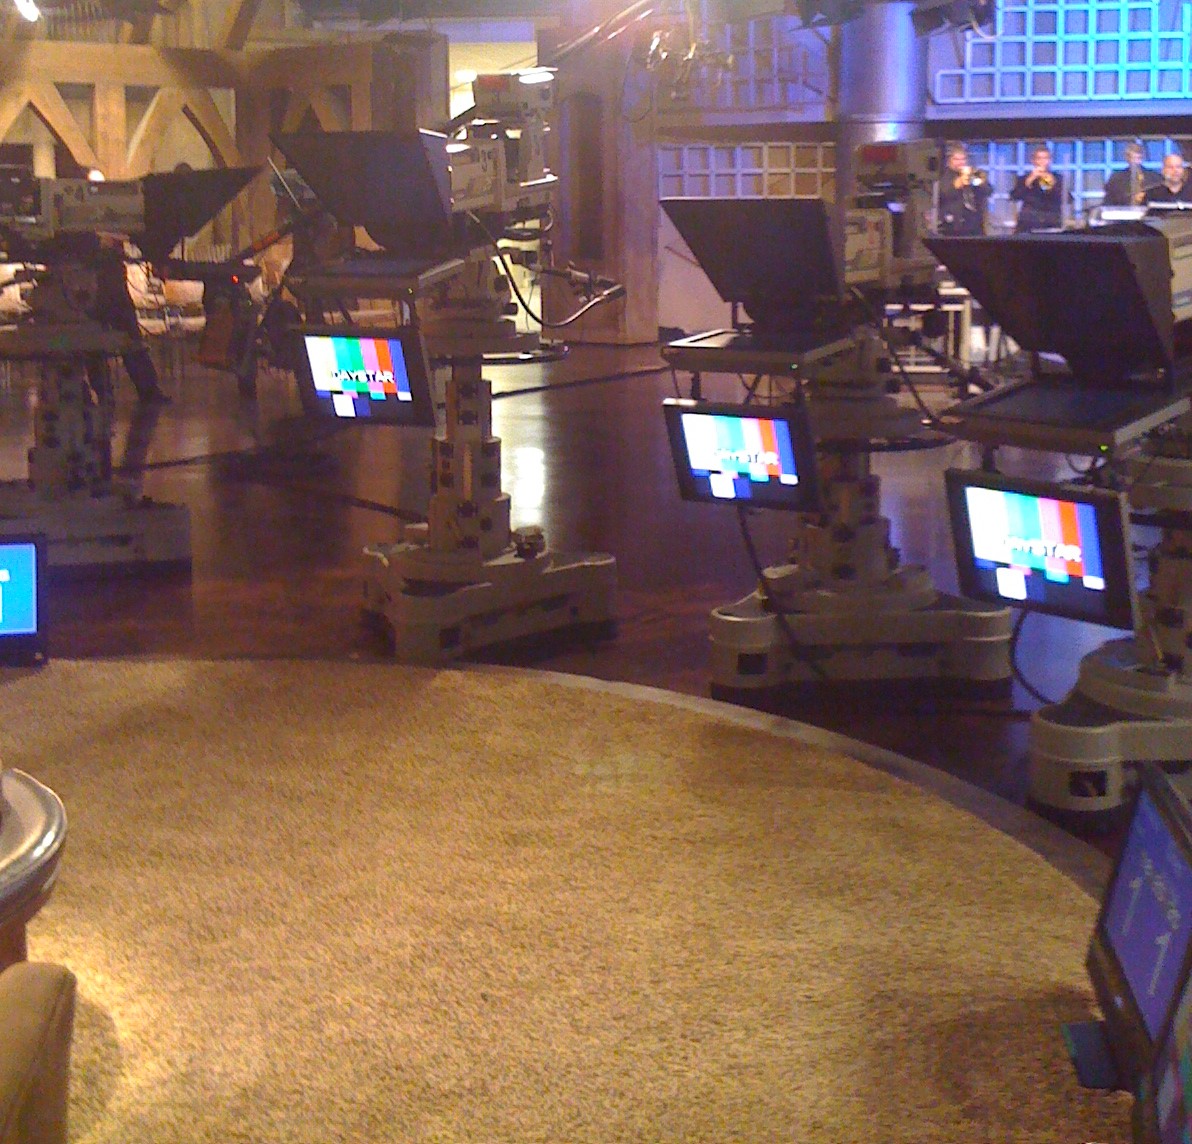 Day Star Television Studio